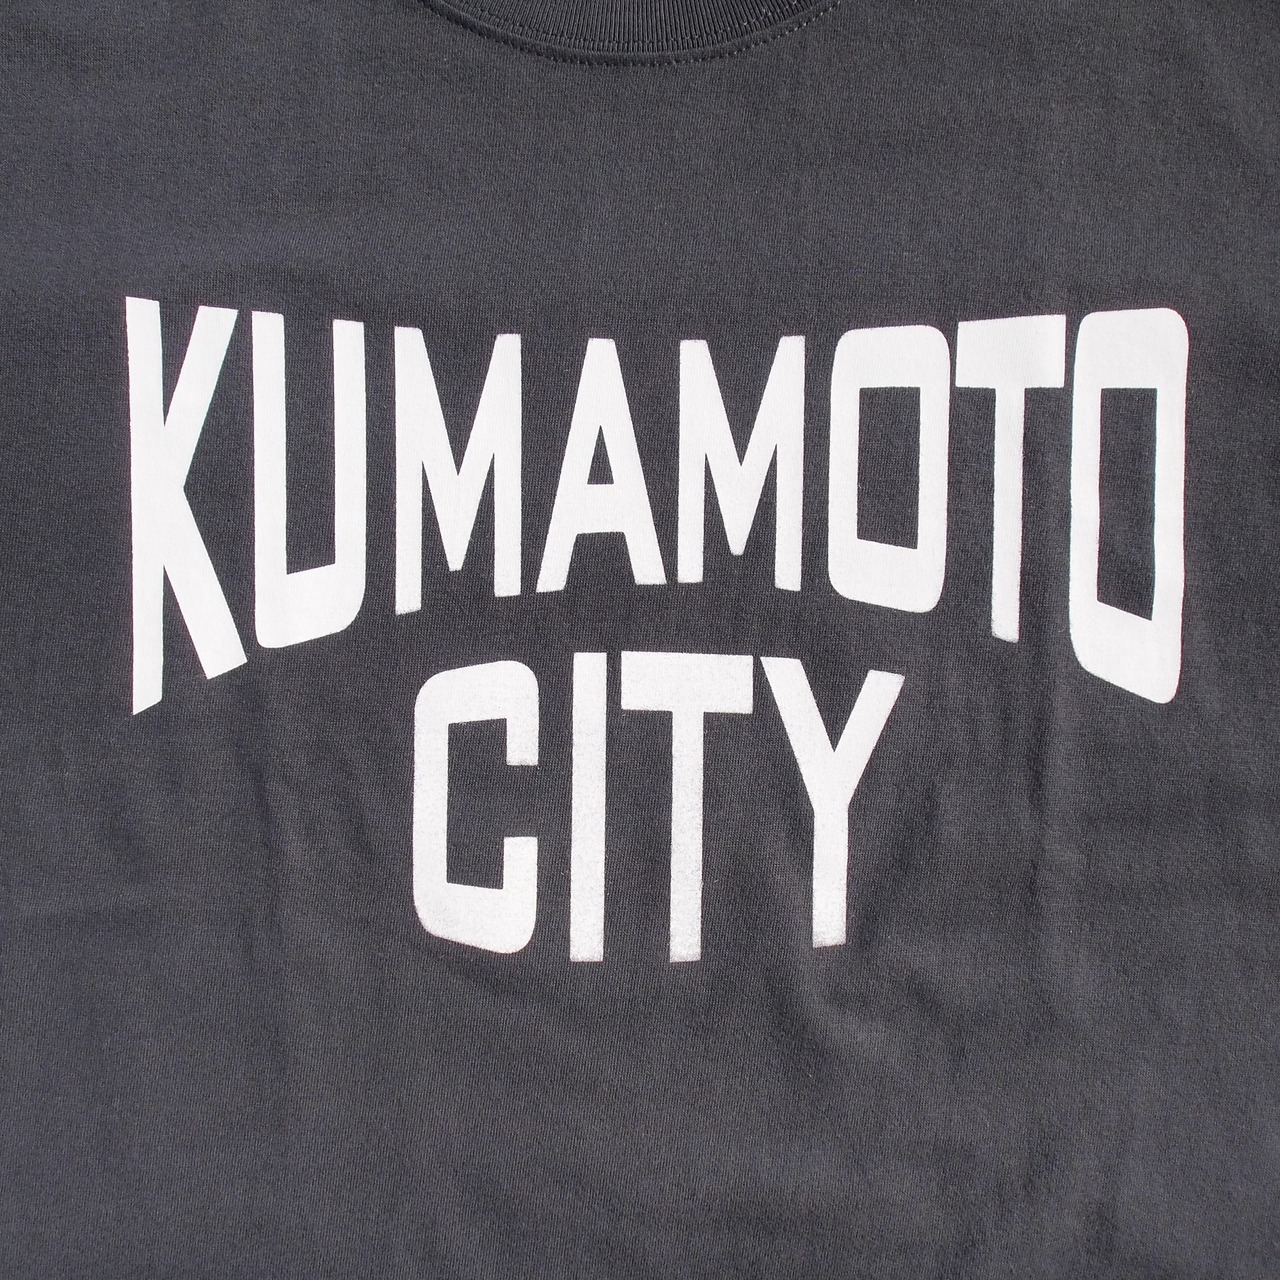 【DARGO】KUMAMOTO CITY T-shirt（2color）